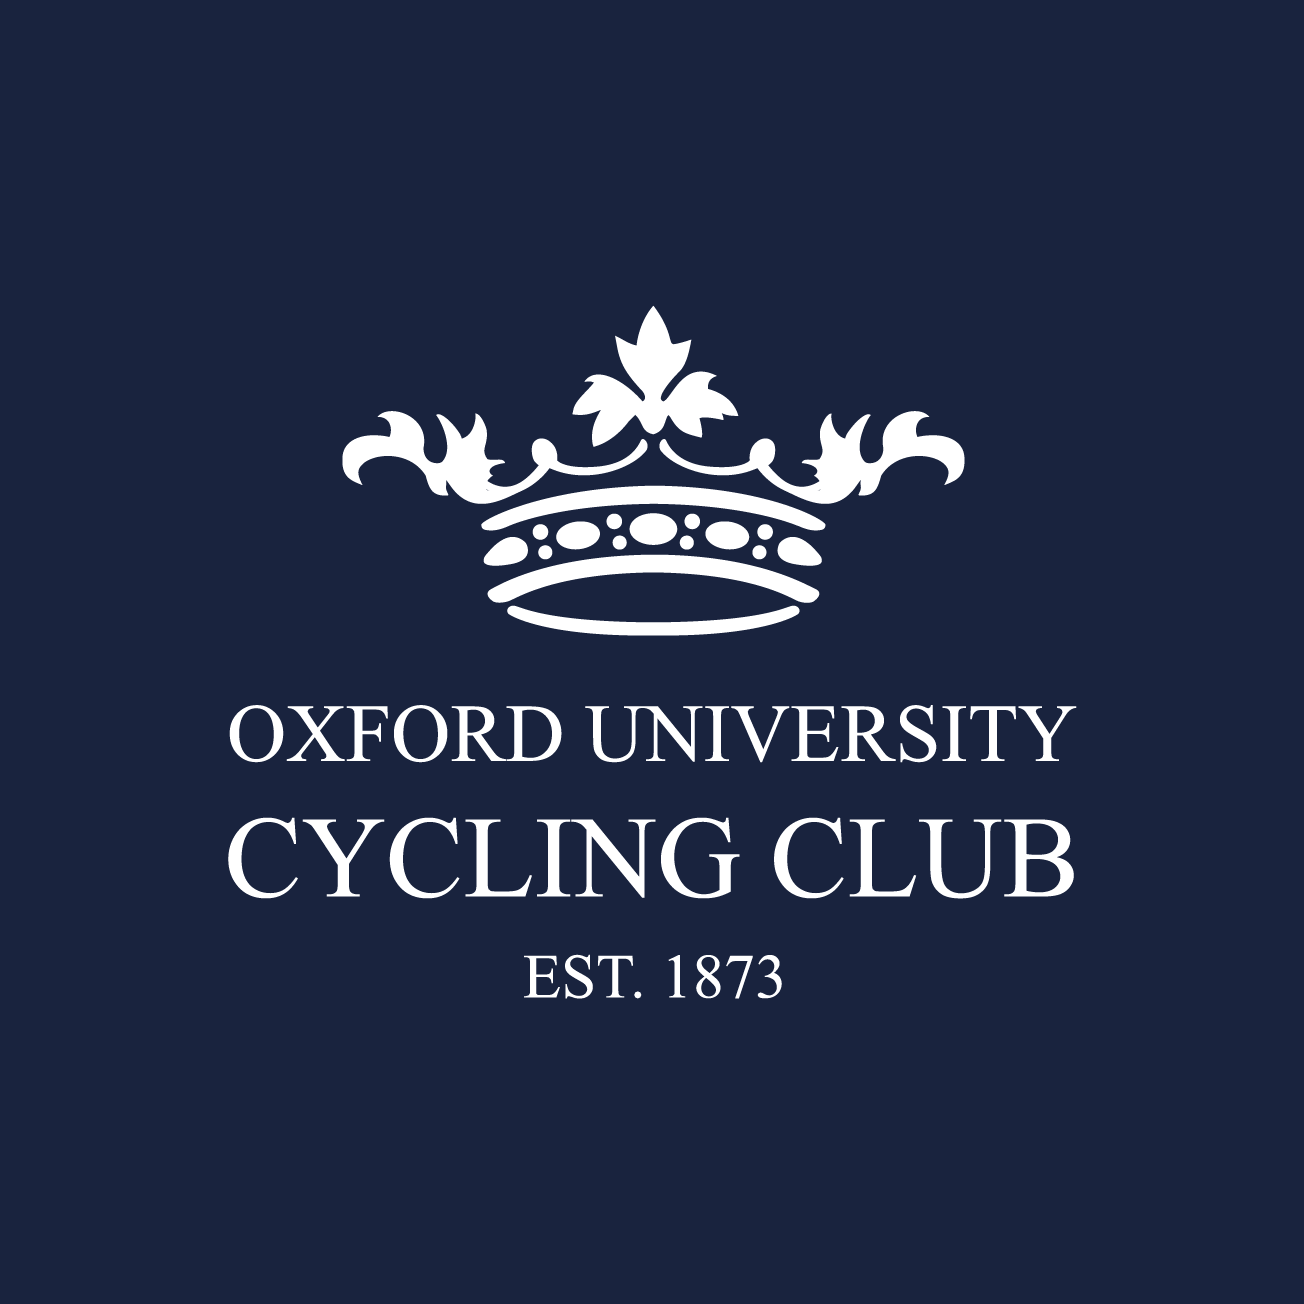 Club Image for OXFORD UNIVERSITY CYCLING CLUB